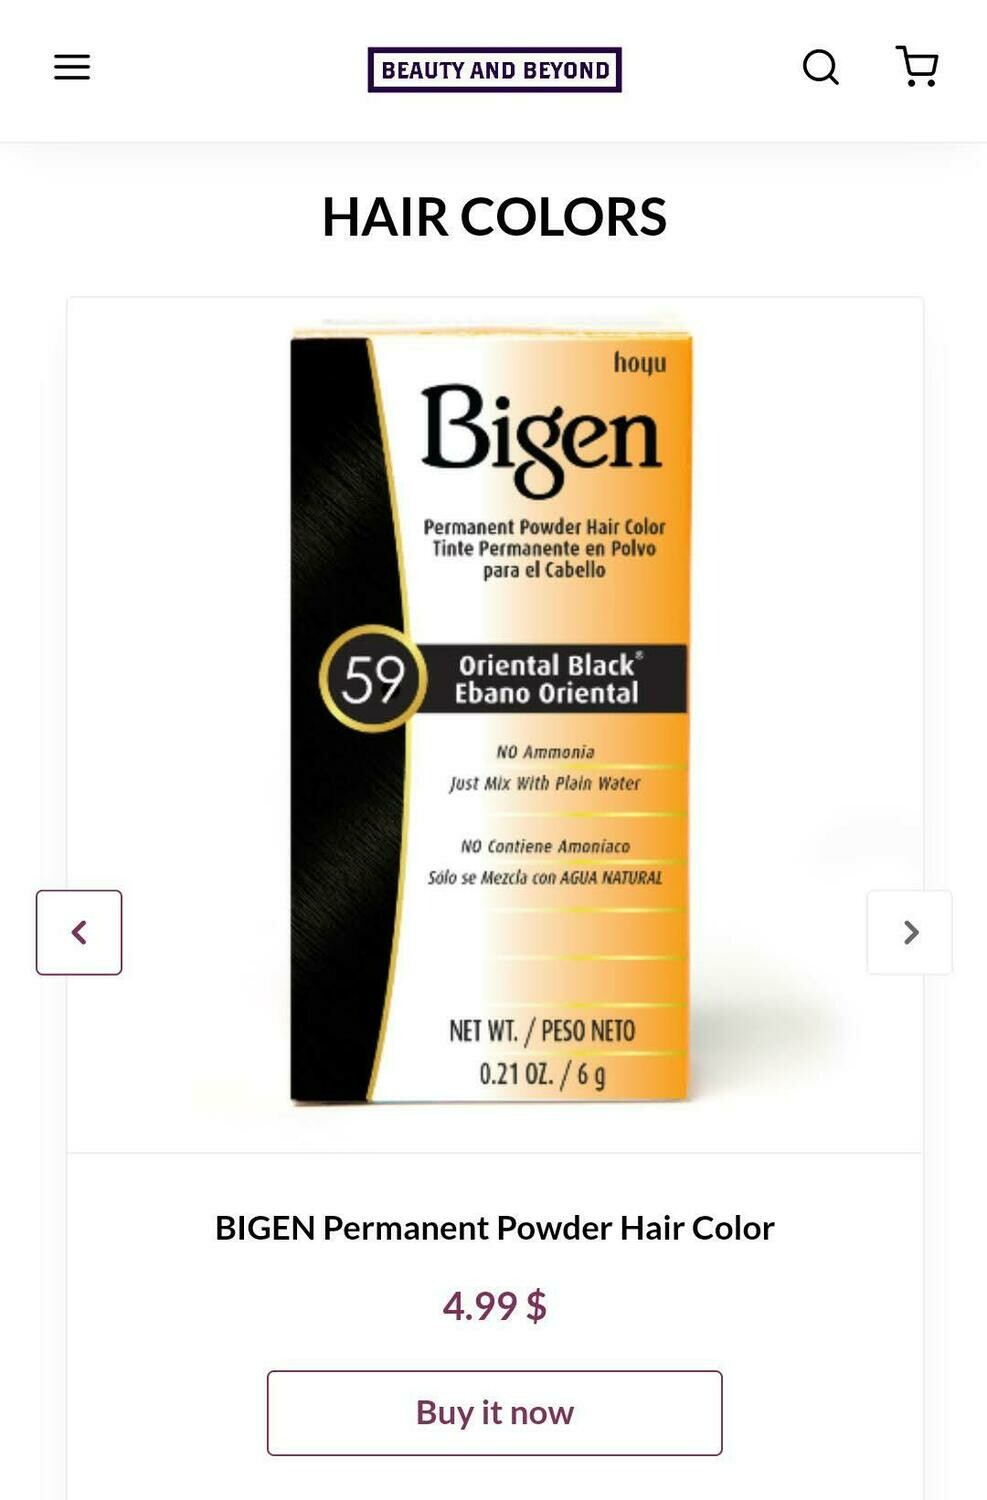 BIGEN Permanent Powder Hair Color